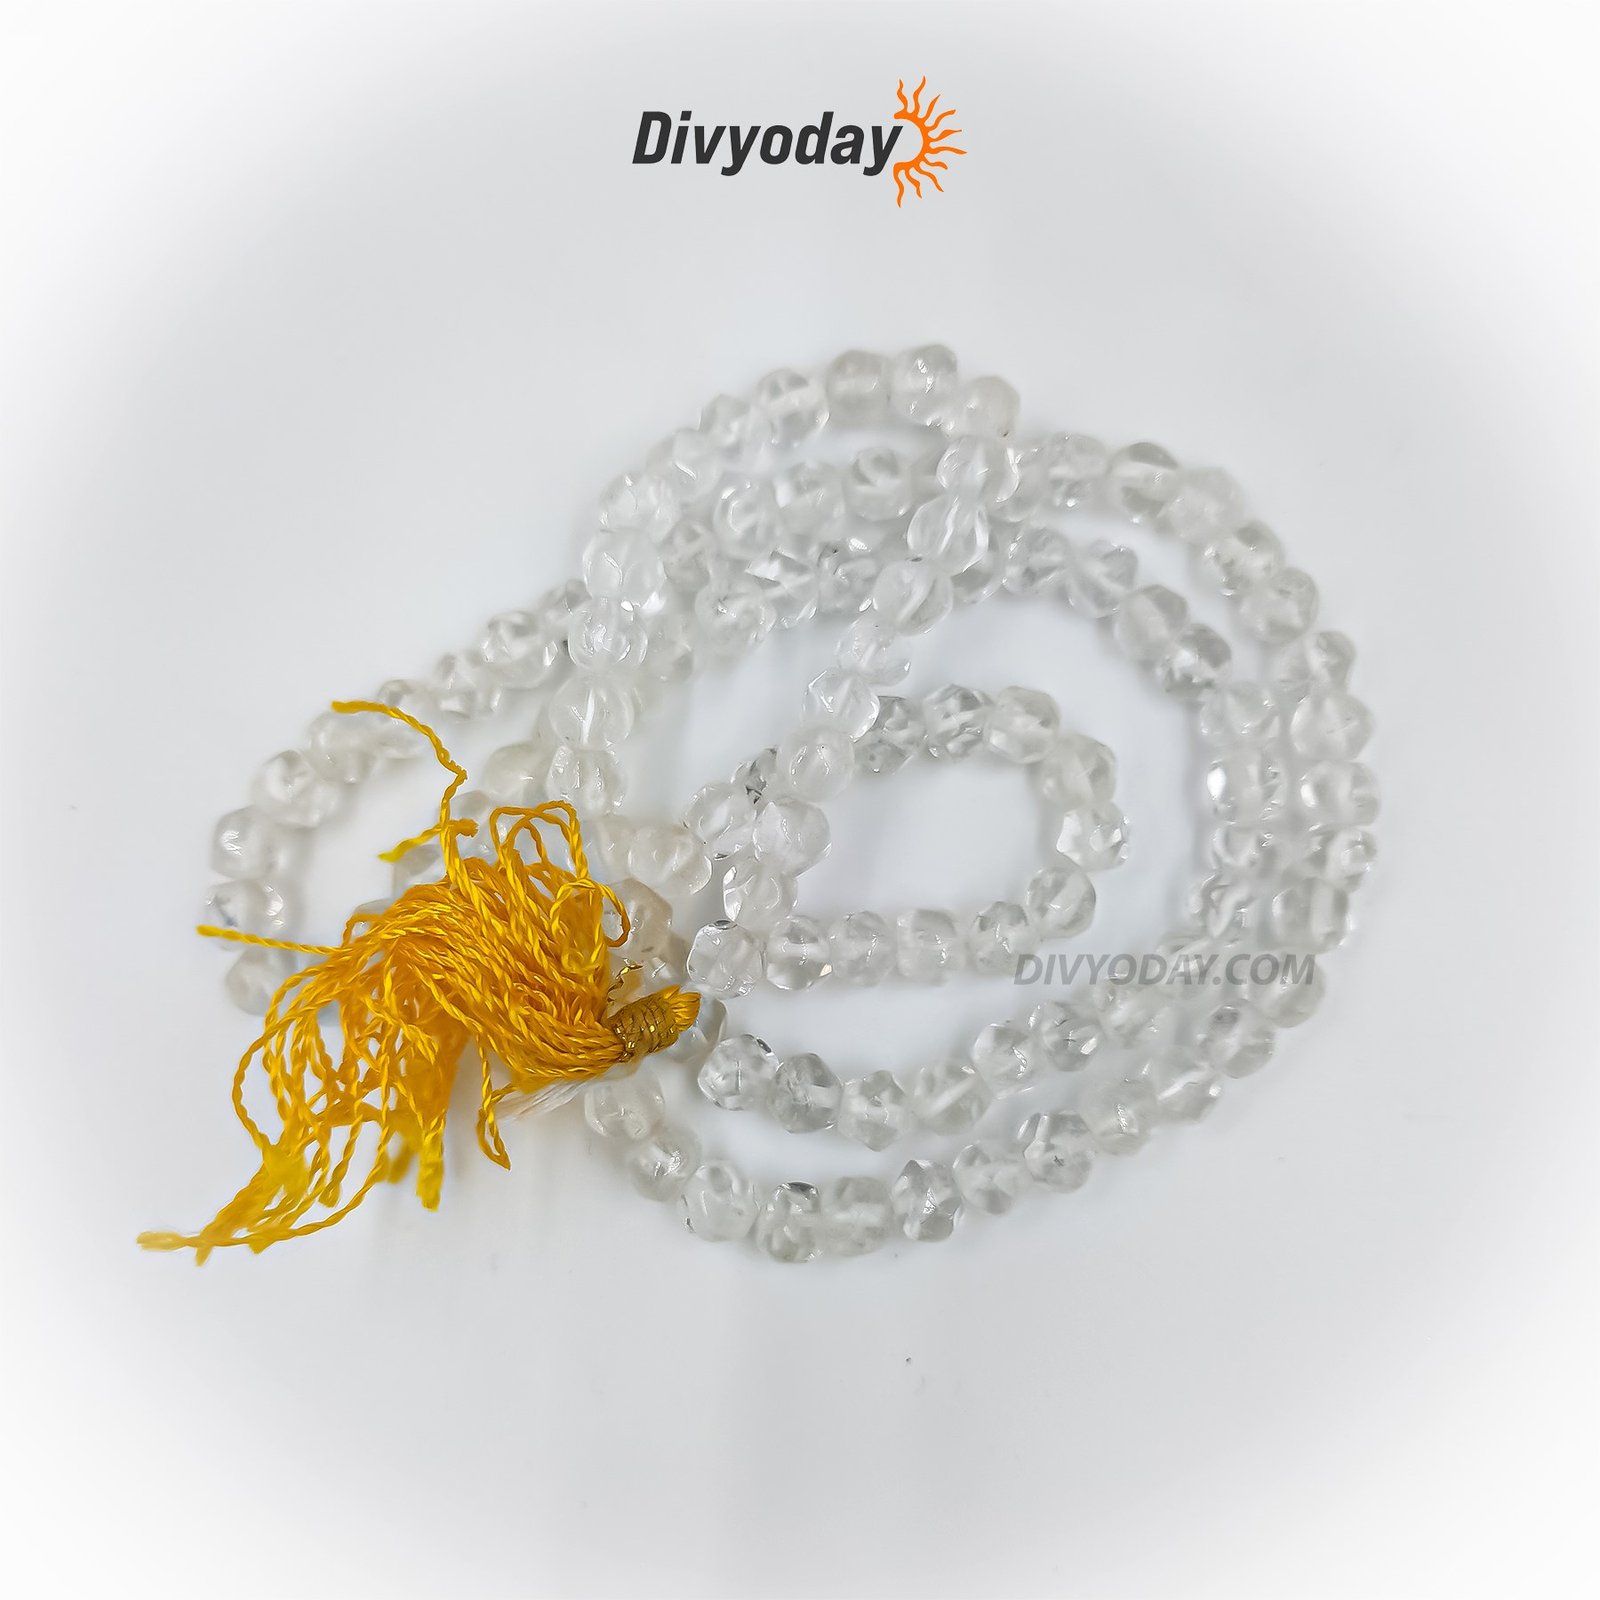 Buy Rs 199 Rudraksha Sphatik Crystal Bracelet Original Online at Low Price